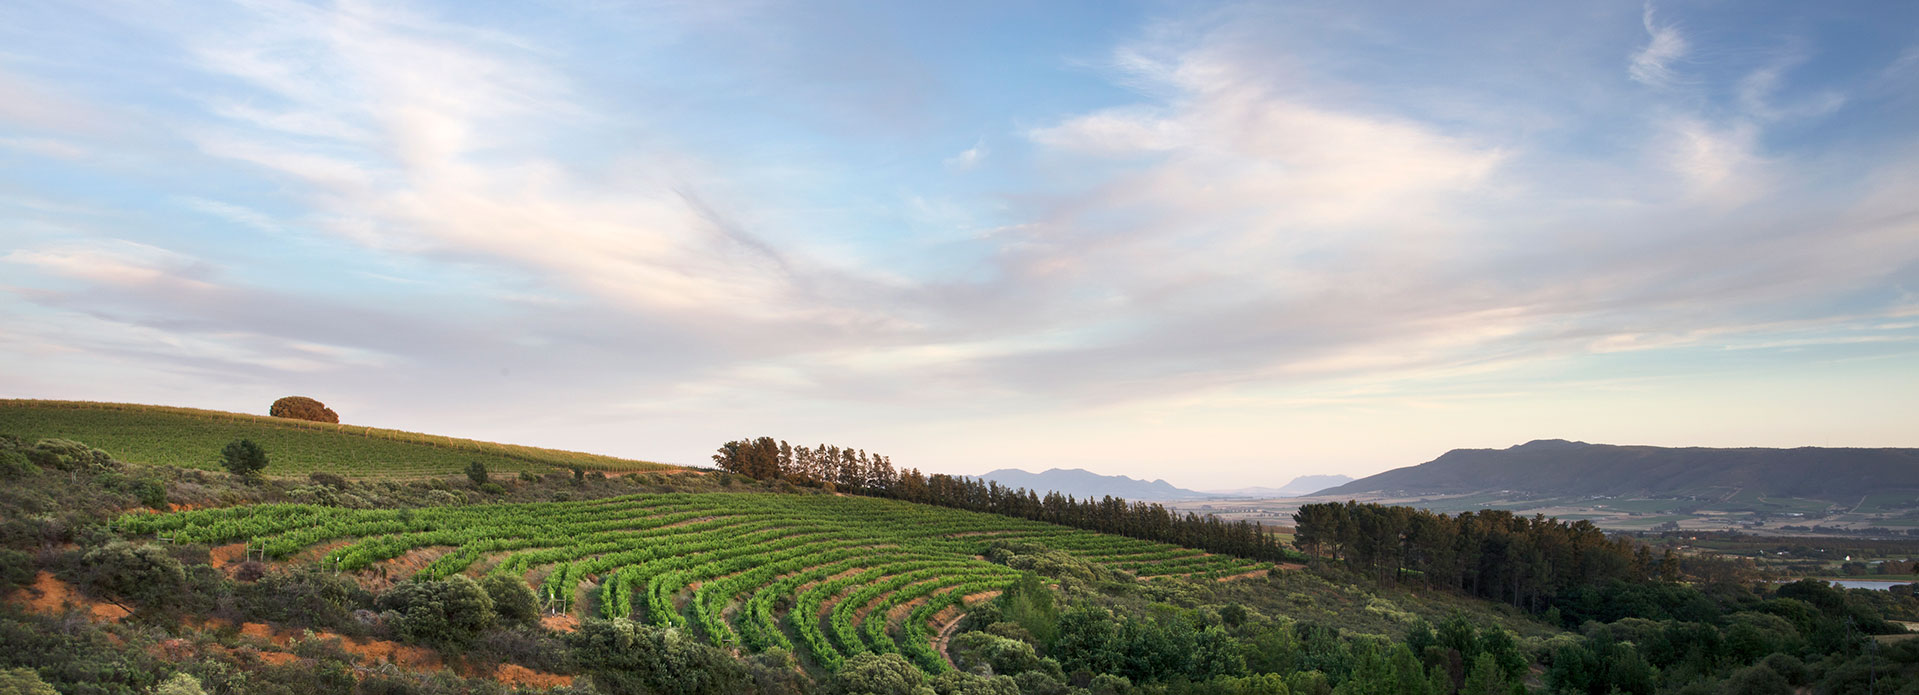 Sunrise over the Backsberg Wine Estate Sauvignon Blanc vineyard in South Africa.